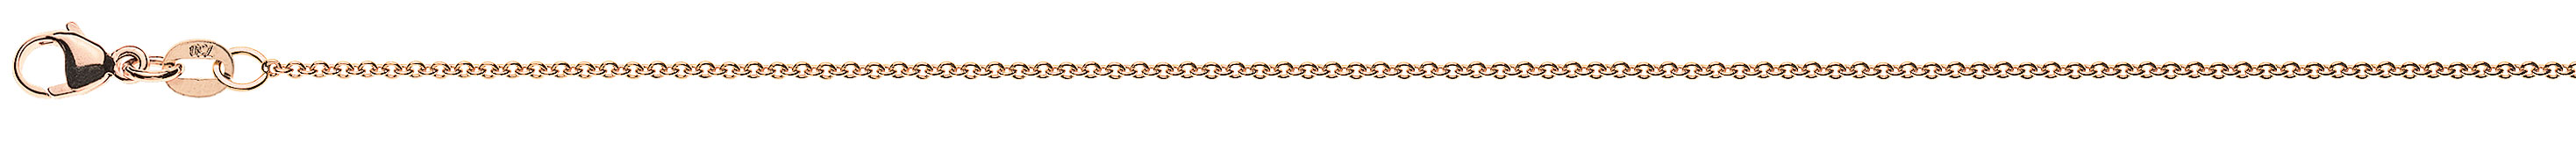 AURONOS Prestige Necklace Rose Gold 18K Round Anchor 50cm 1.3mm